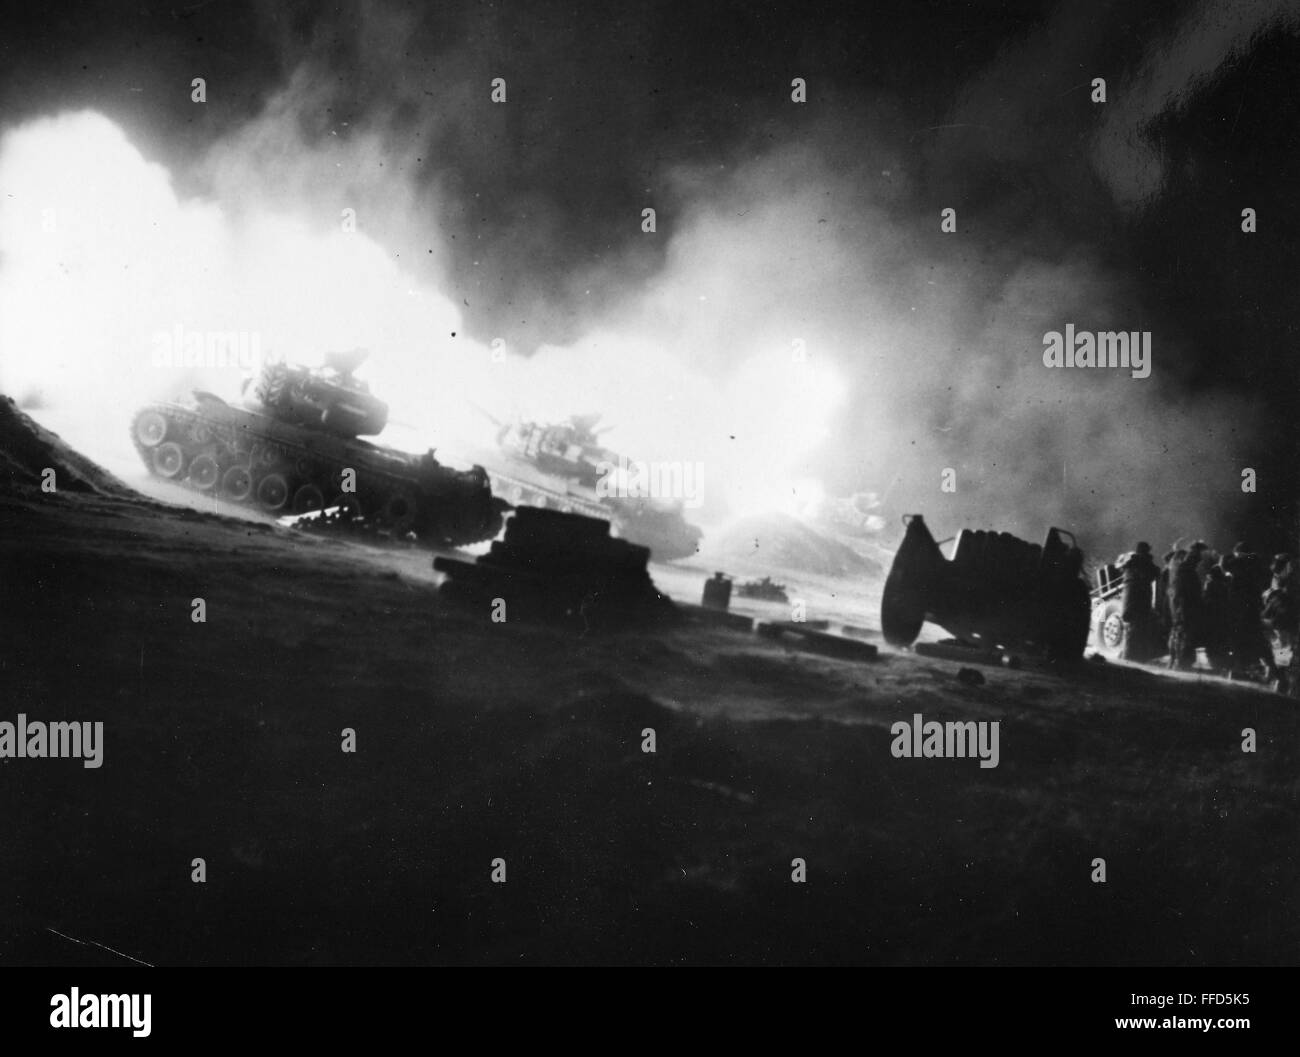 KOREAN WAR: TANKS. /nAmerican tanks fighting at night in Korea. Photograph, c1952. Stock Photo